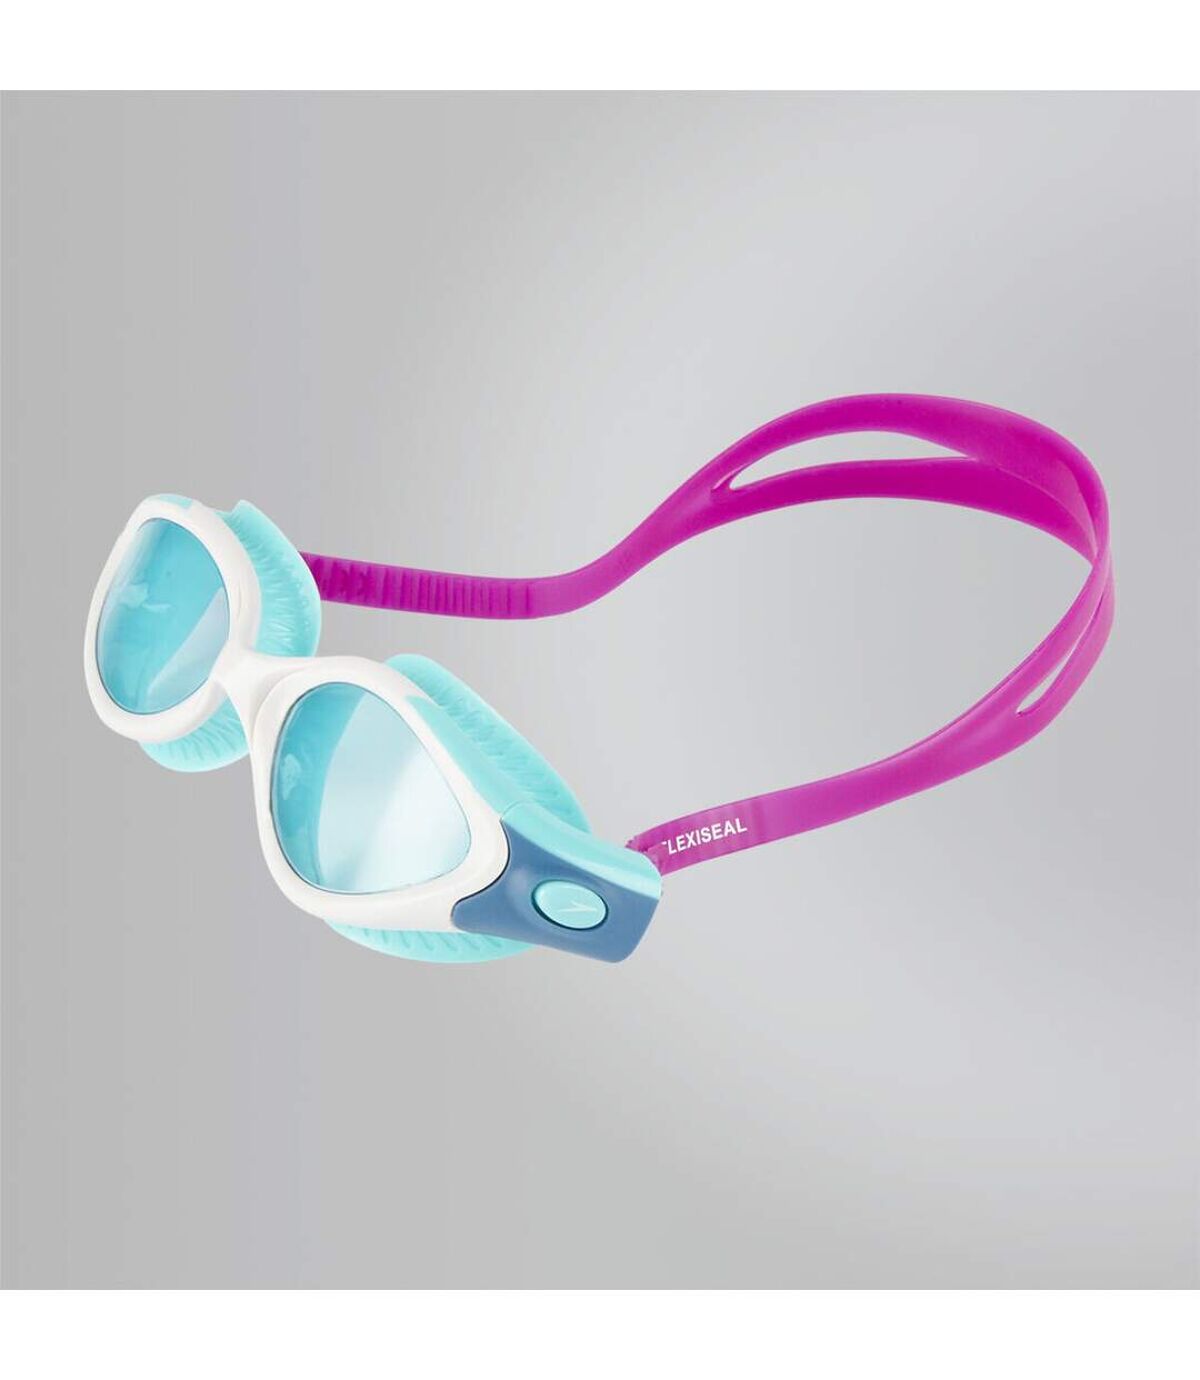 Speedo - Lunettes de natation FUTURA - Femme (Violet/bleu) - UTRD117